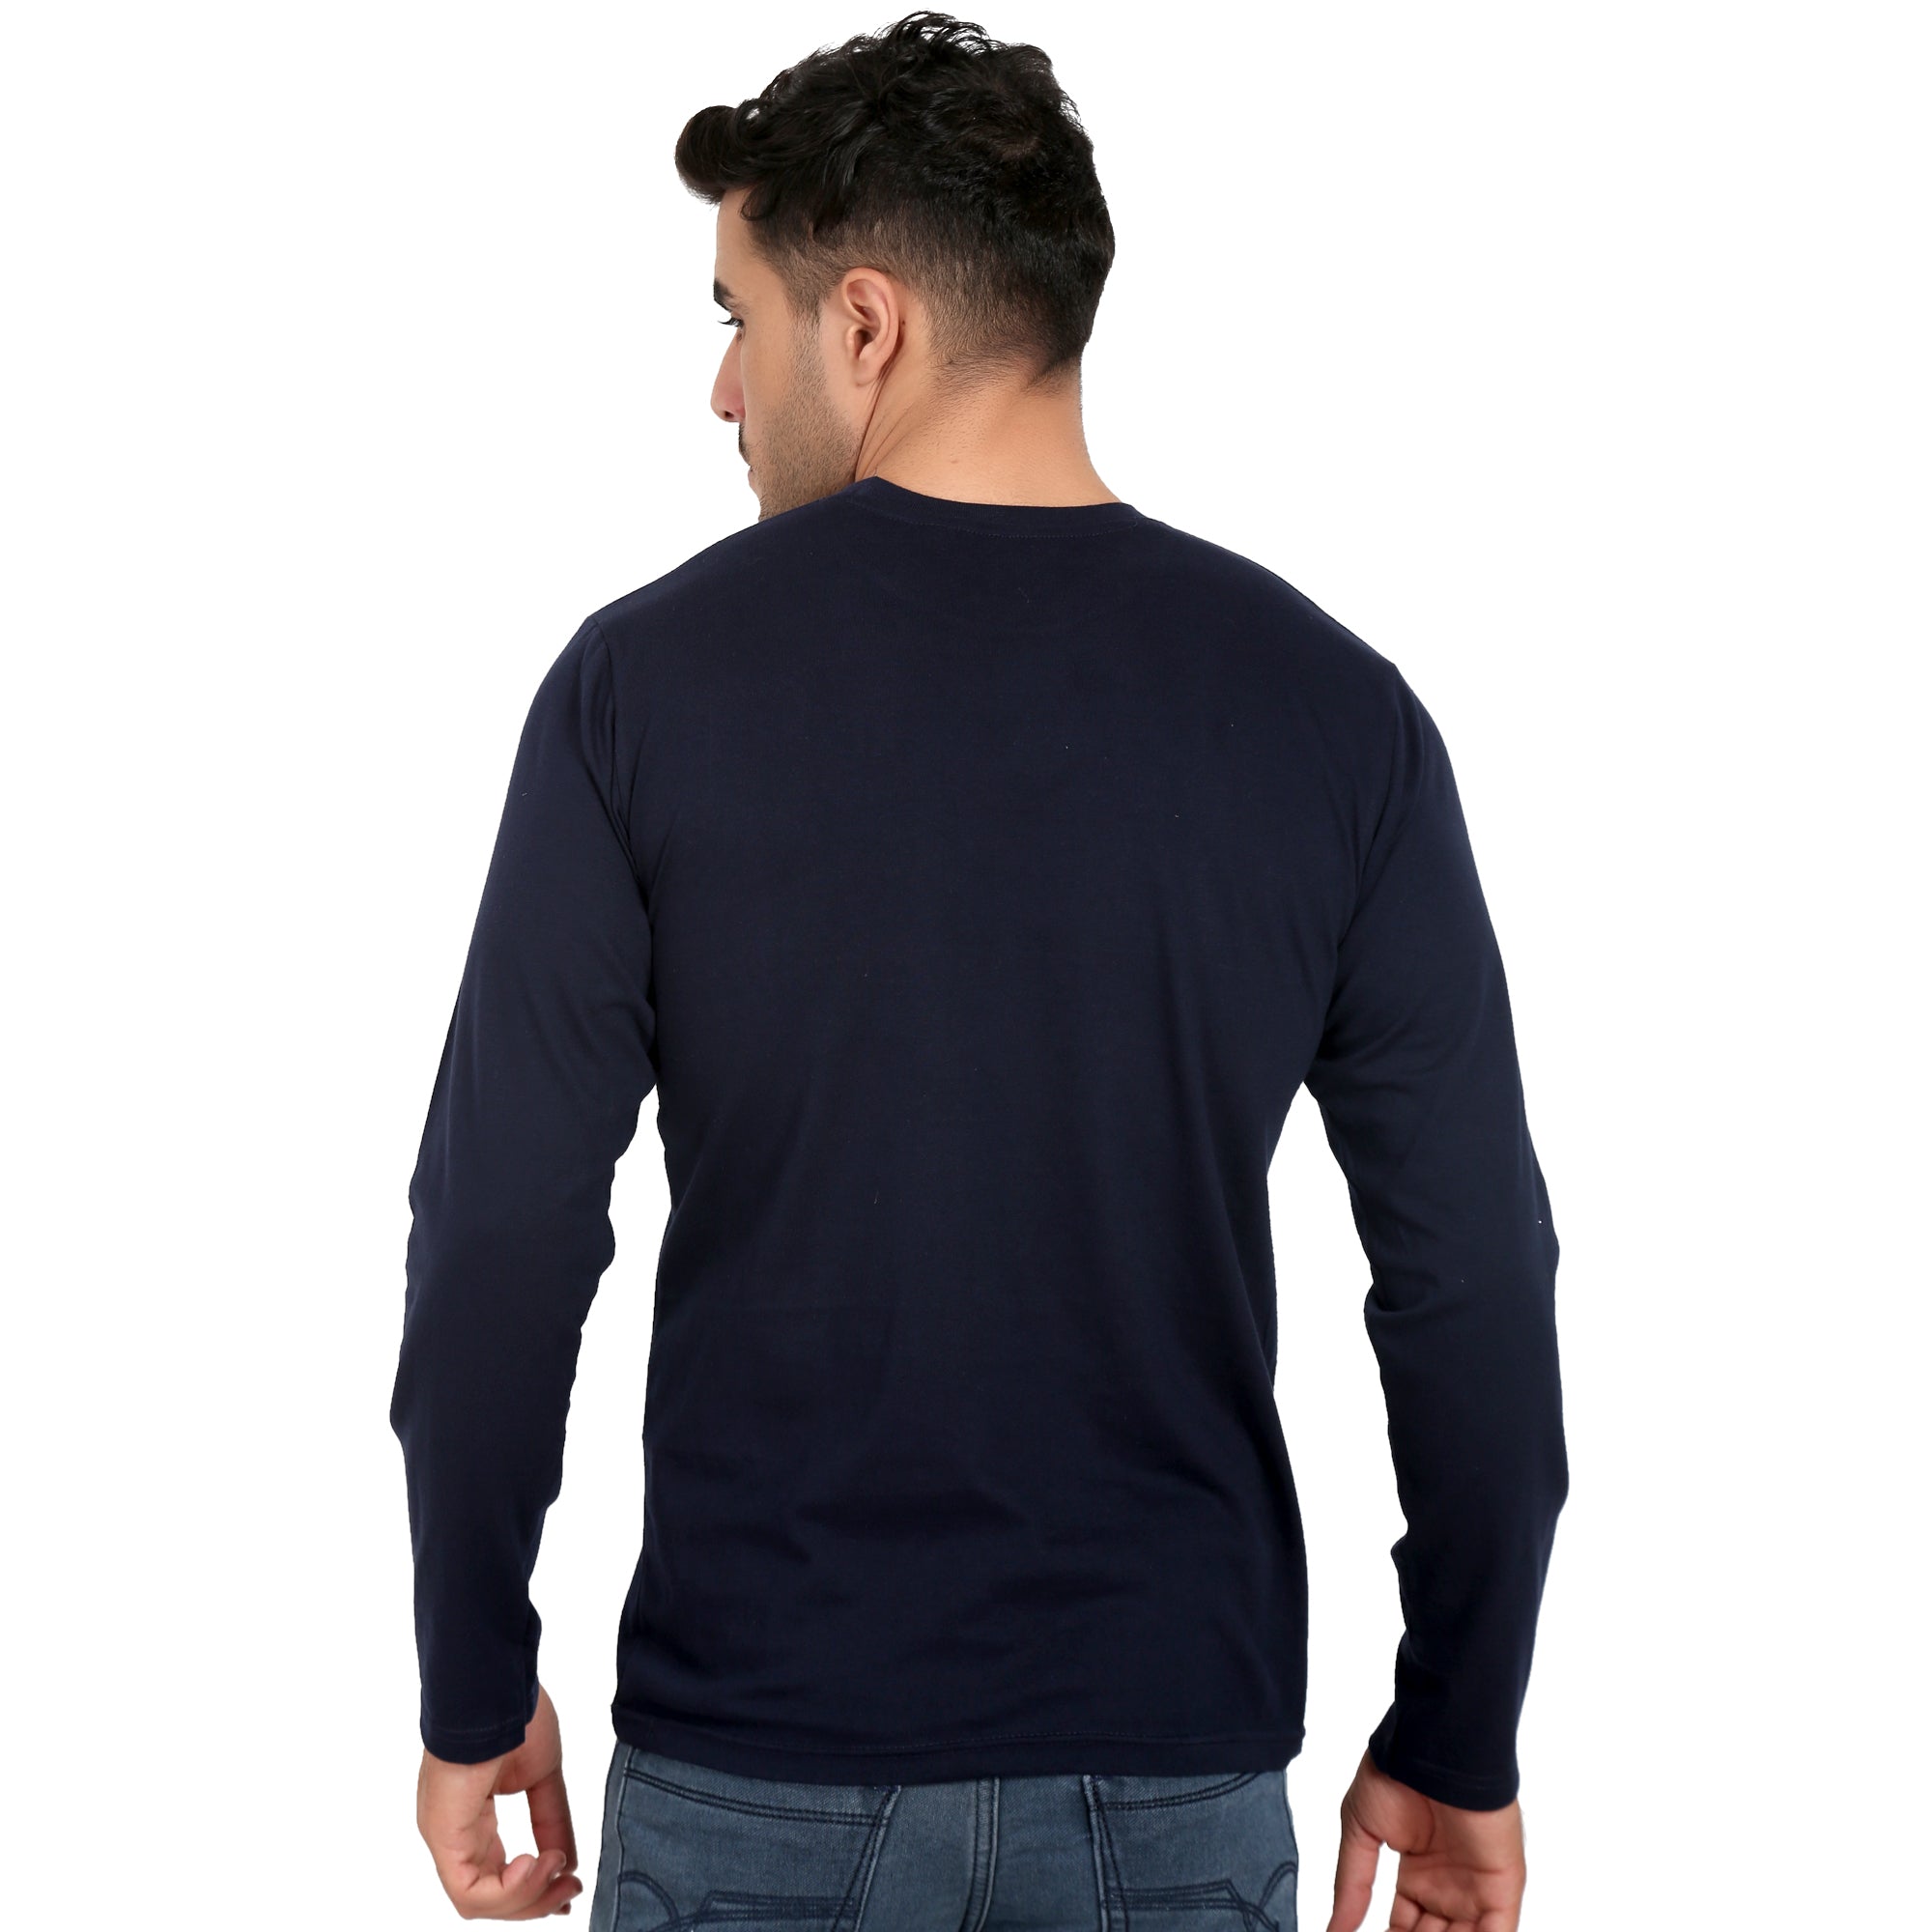 Men Crew Neck Cotton T-Shirts - Full Sleeves, Navy Blue Colour